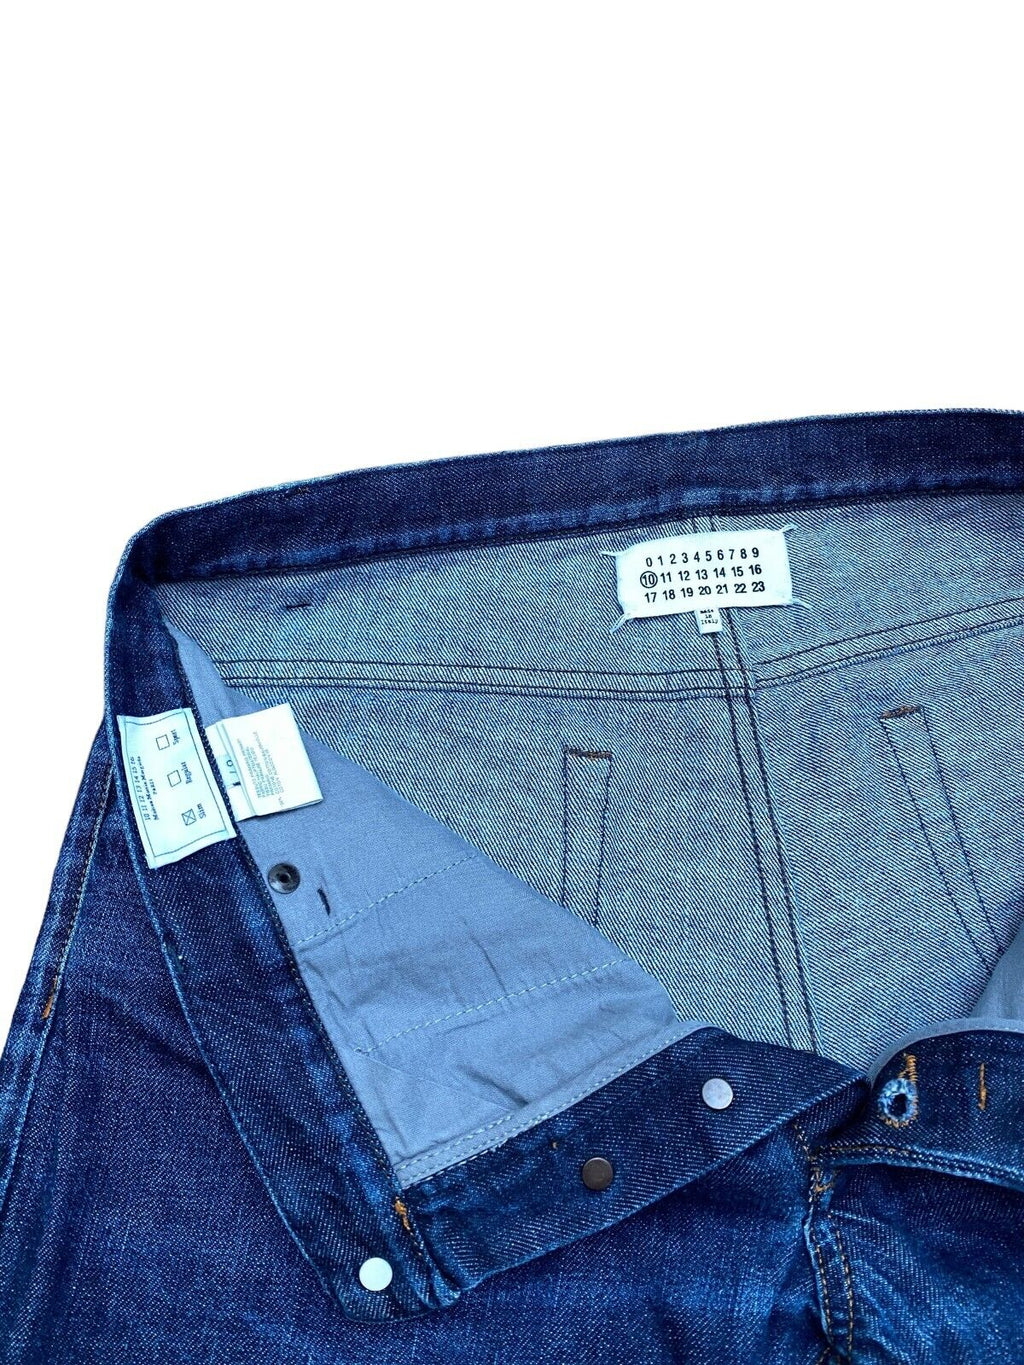 4 Stitches Blue Denim Jeans  Size 48 / US 32 Slim Fit